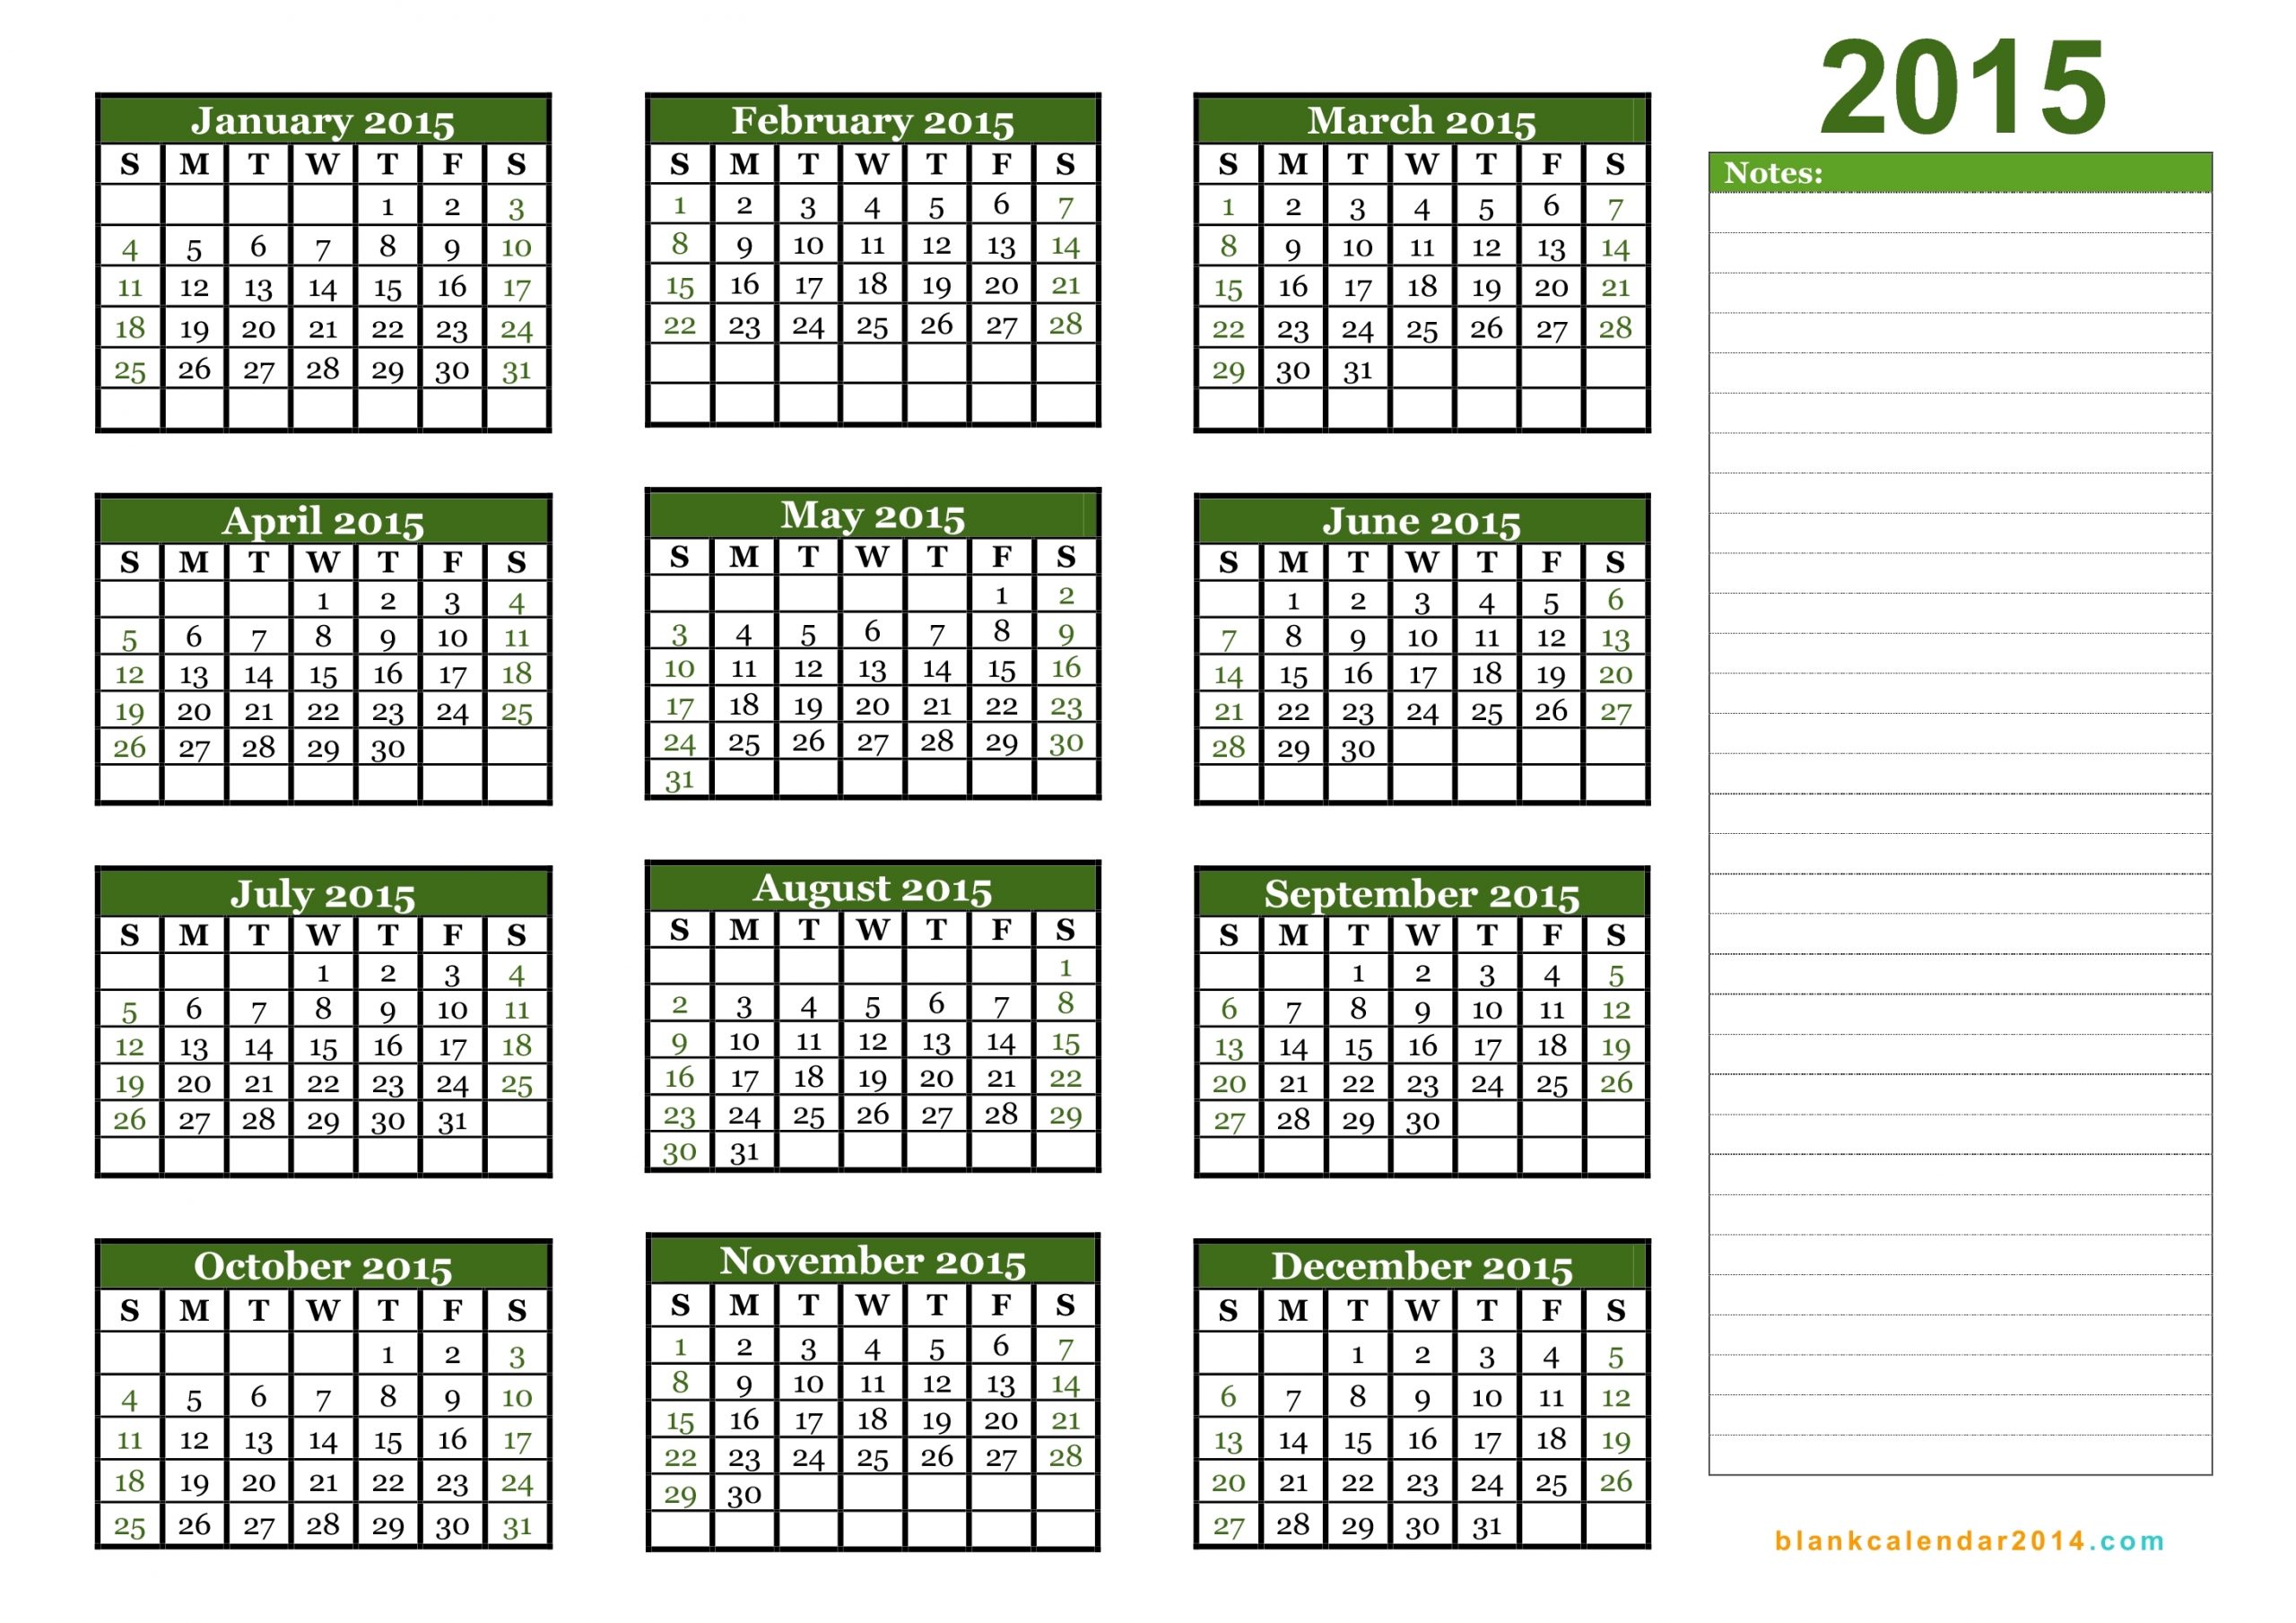 Julian Calendar 2015 | Printable 2017 Calendars throughout Julian Year Calendar 2015 Printable